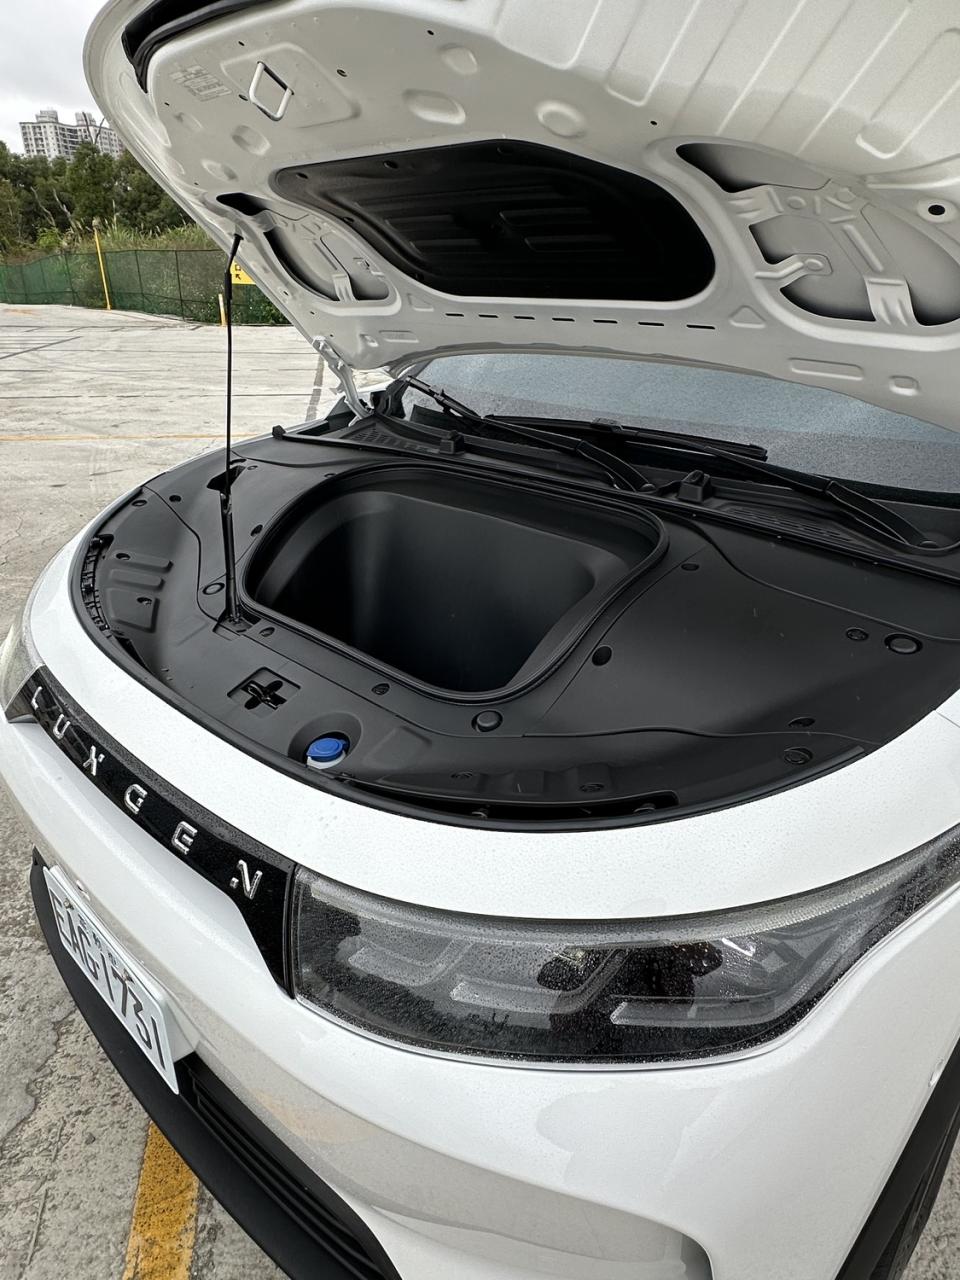 Luxgen N7 全車系標配 36 公升容積的前行李廂。